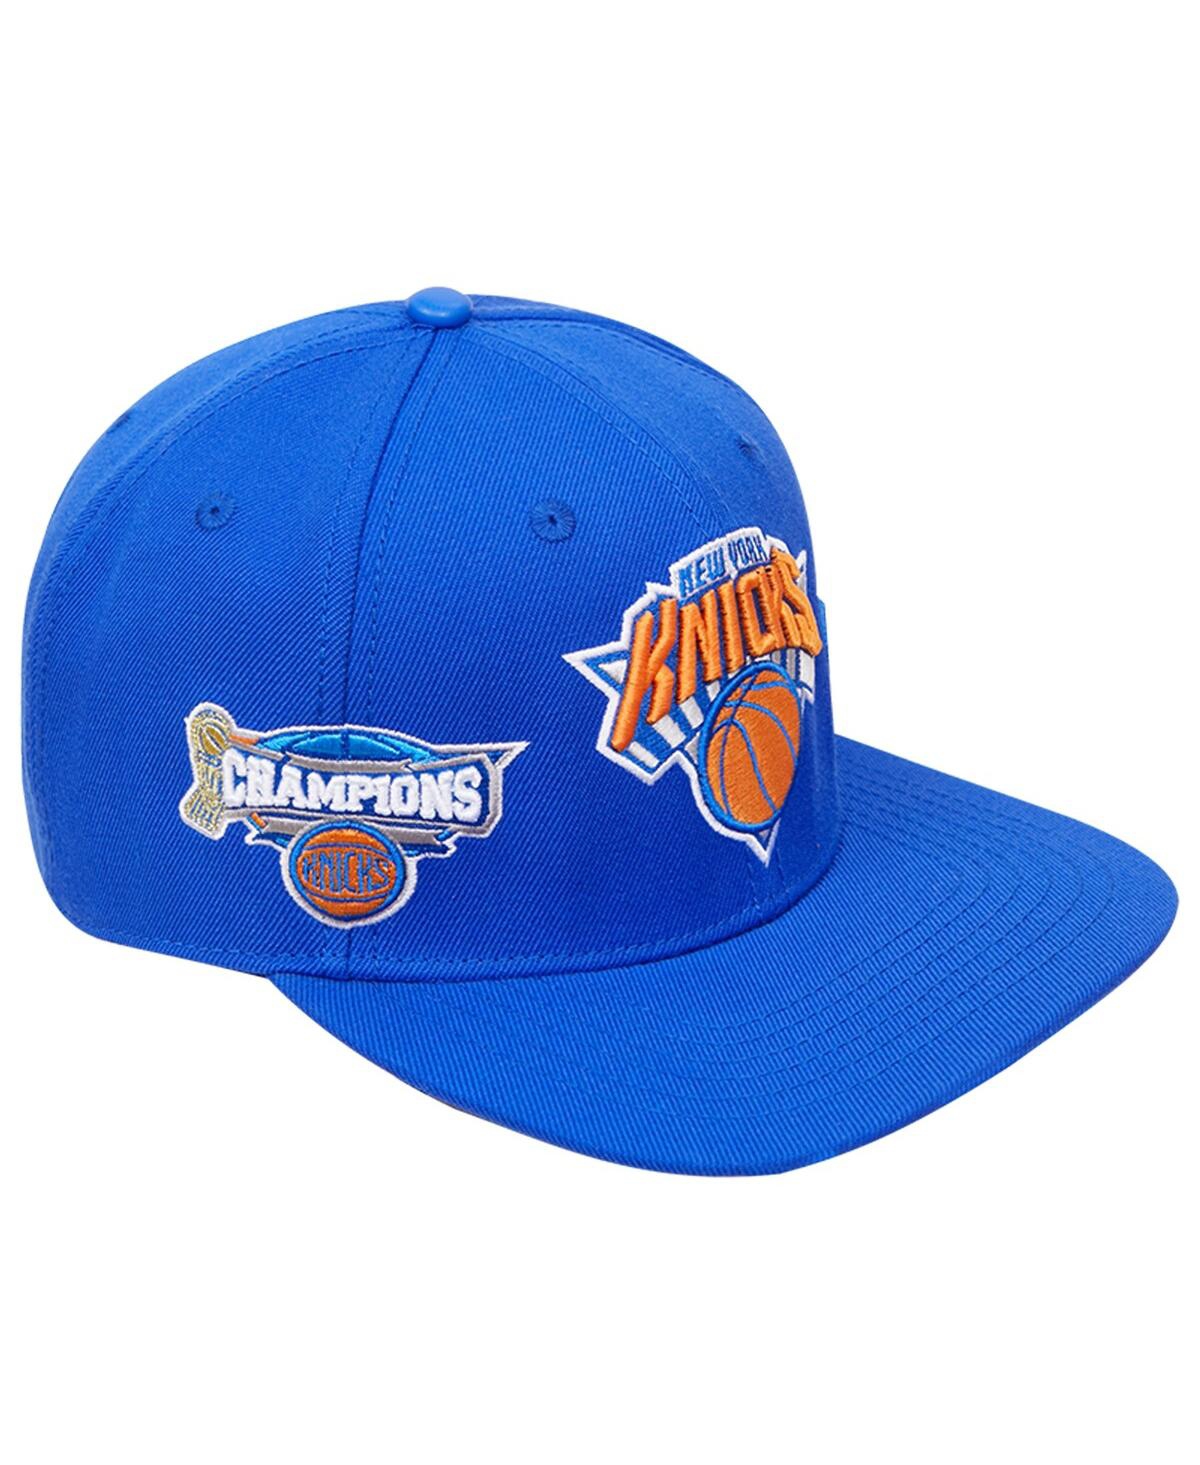 Shop Post Men's Royal New York Knicks Championship Capsule Snapback Hat